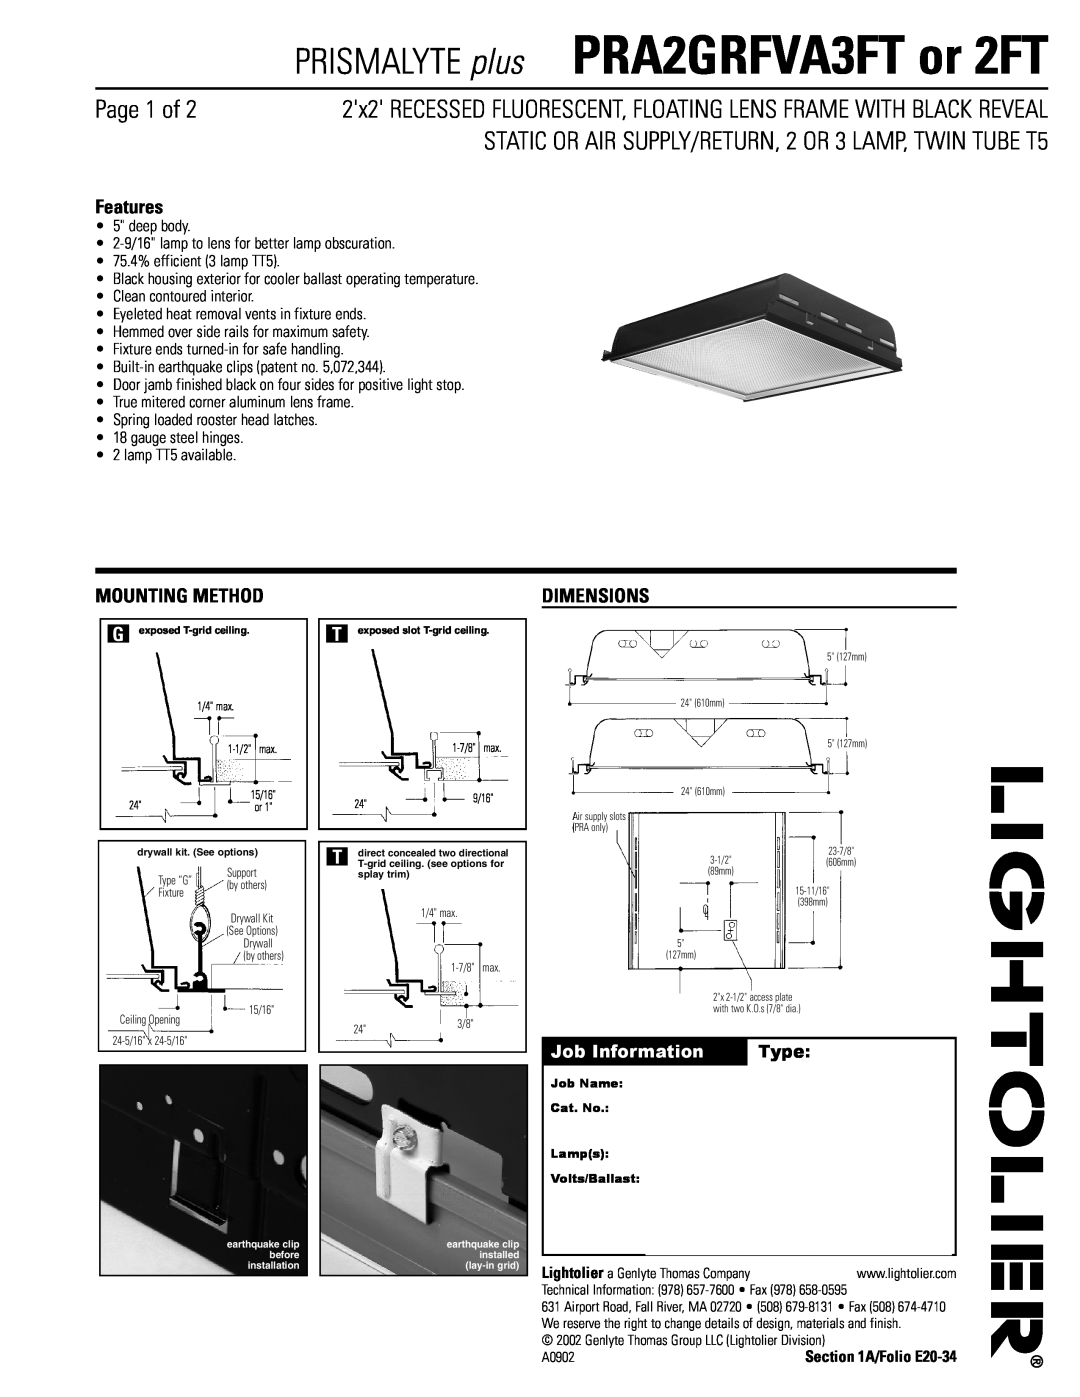 Lightolier PRA2GRFVA2FT dimensions PRISMALYTE plus PRA2GRFVA3FT or 2FT, Page 1 of, Features, Mounting Method, Dimensions 